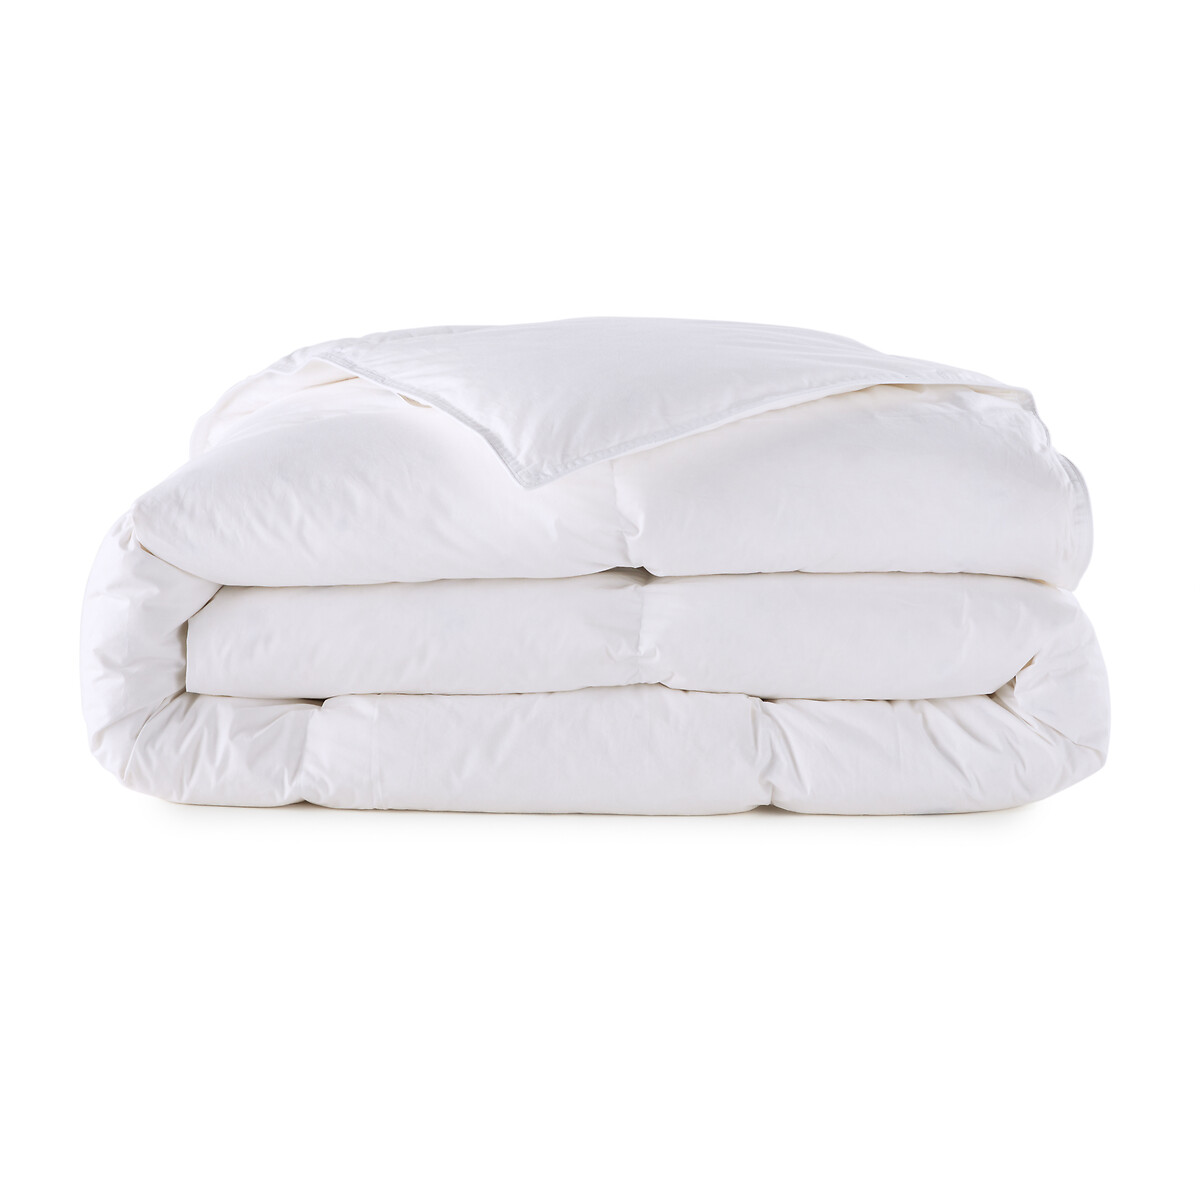 Одеяло LA REDOUTE INTERIEURS Одеяло Натуральное 260 x 240 см белый, размер 260 x 240 см - фото 2